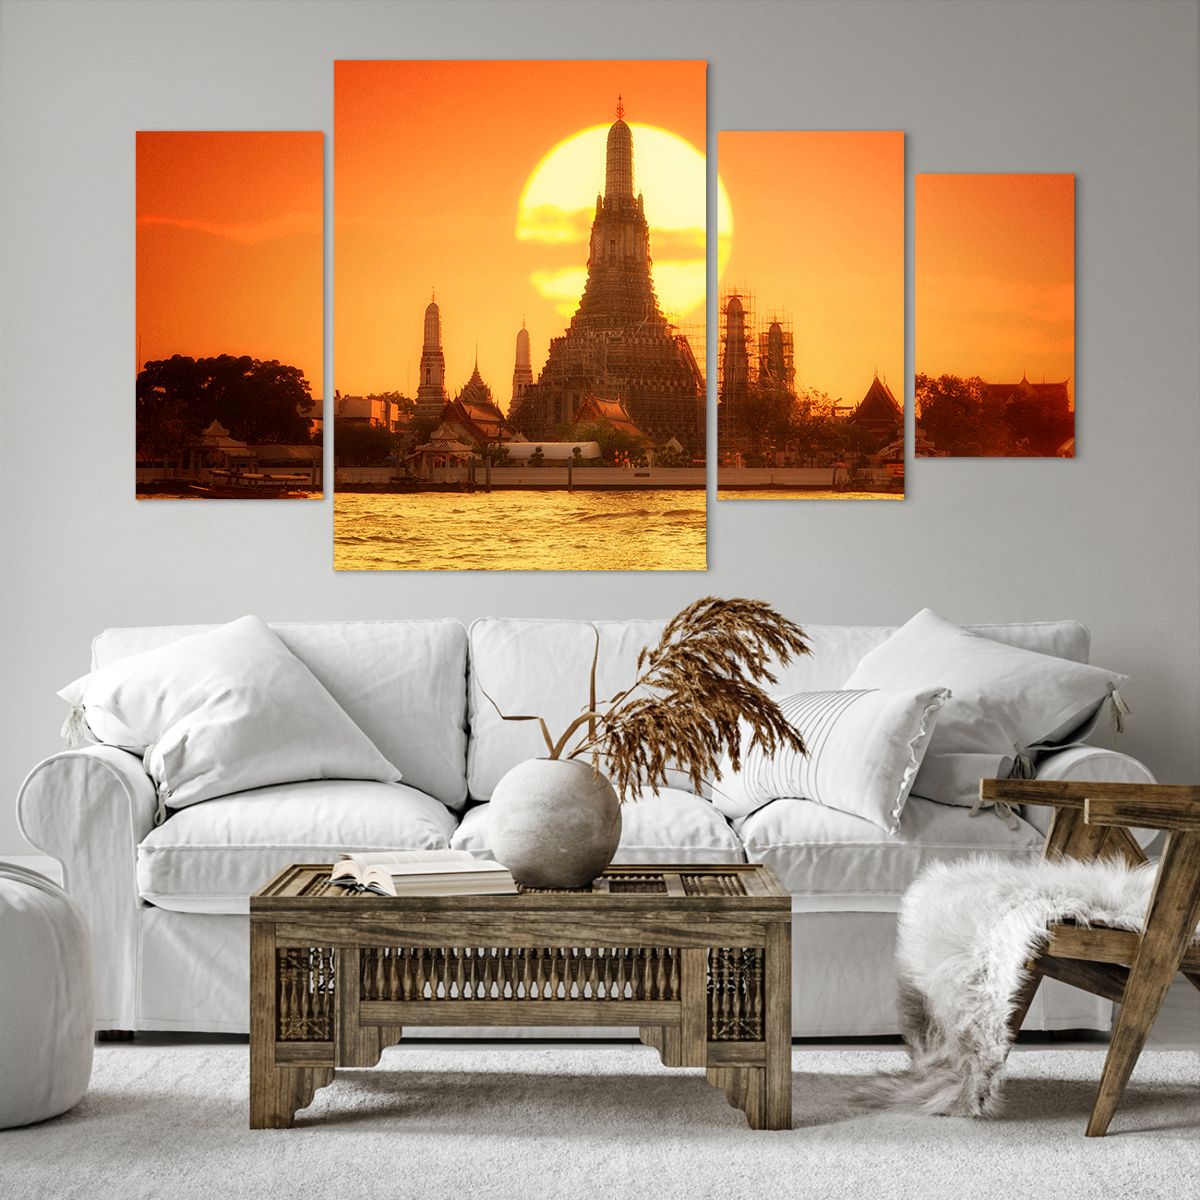 Impression sur toile Bangkok, Impression sur toile Temple De L'Aube, Impression sur toile Thaïlande, Impression sur toile Soleil, Impression sur toile Bouddhisme